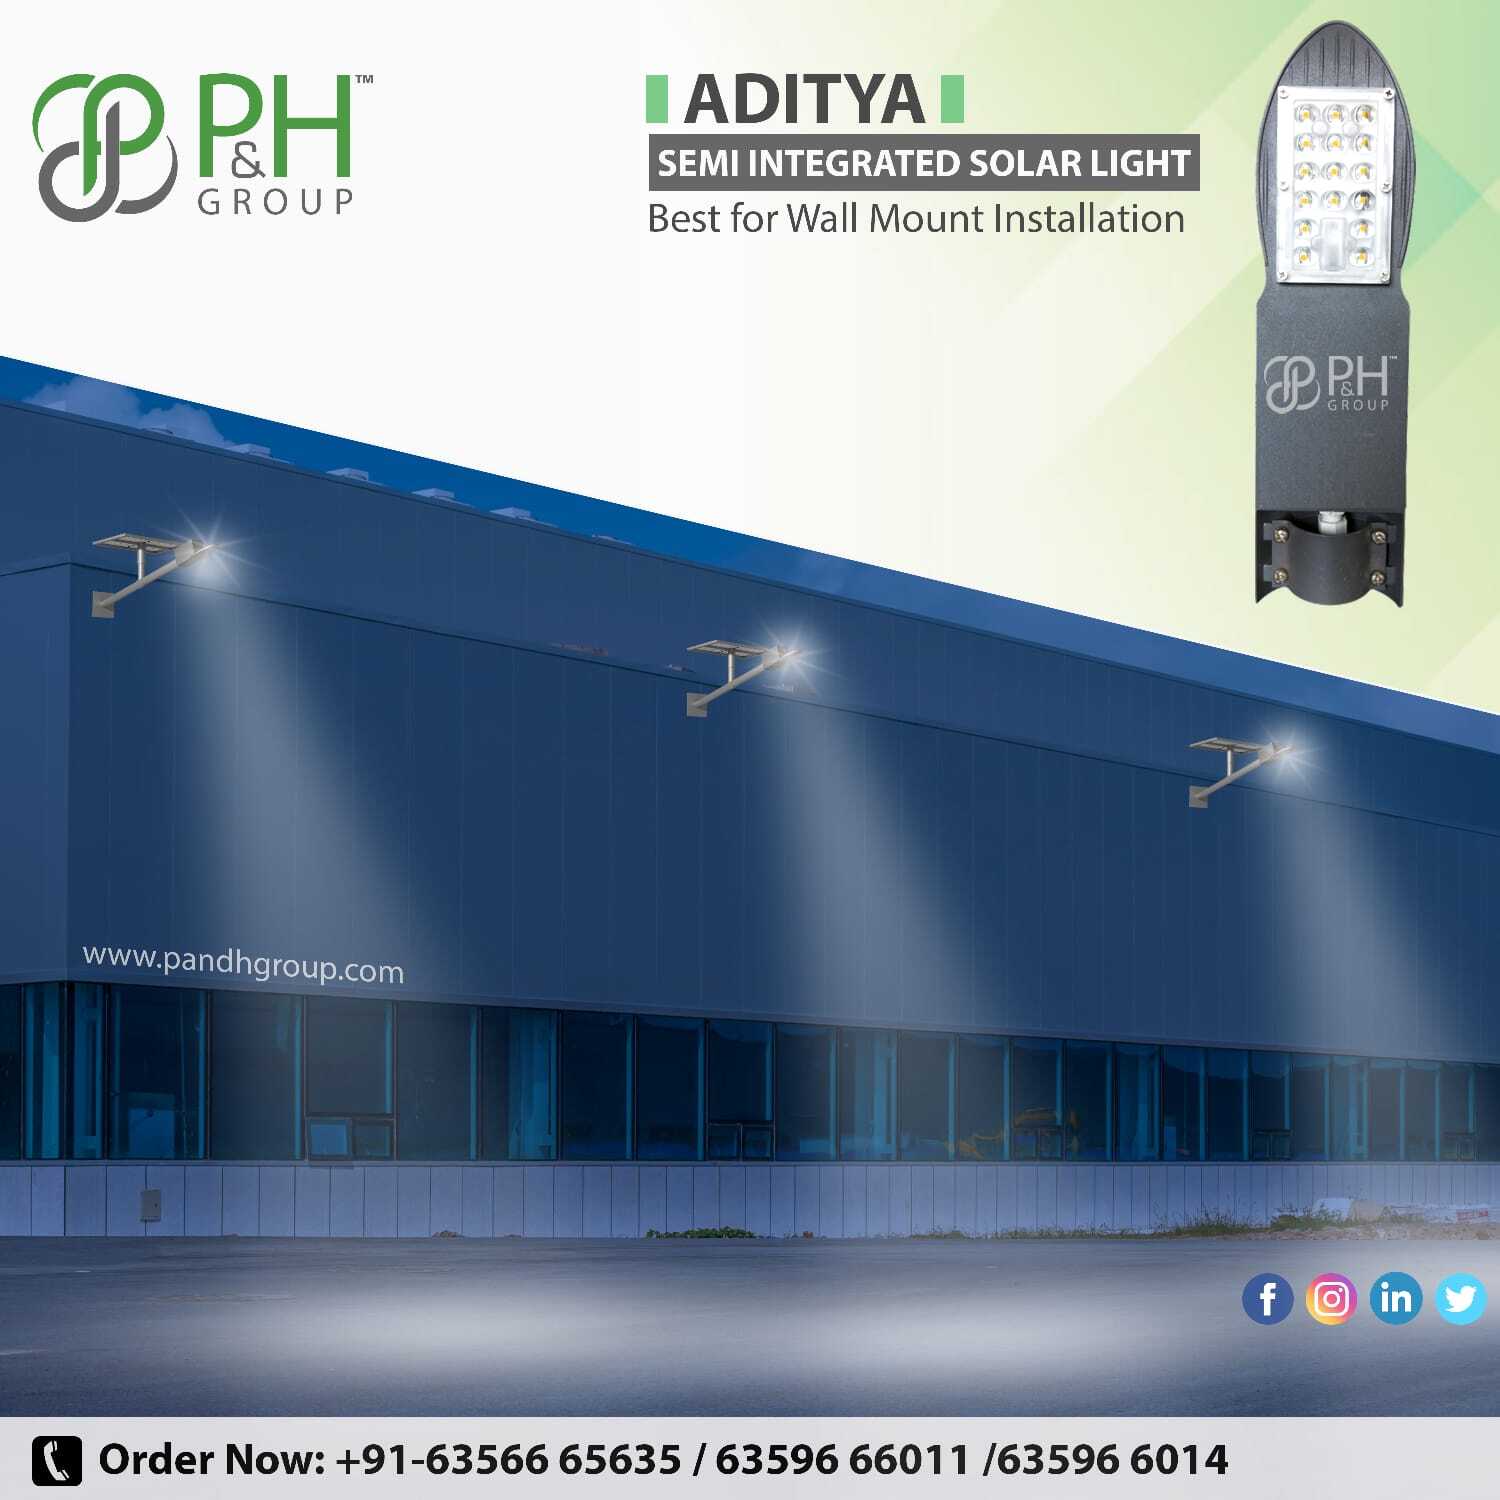 9w Semi integrated Solar Lighting System - Aditya model